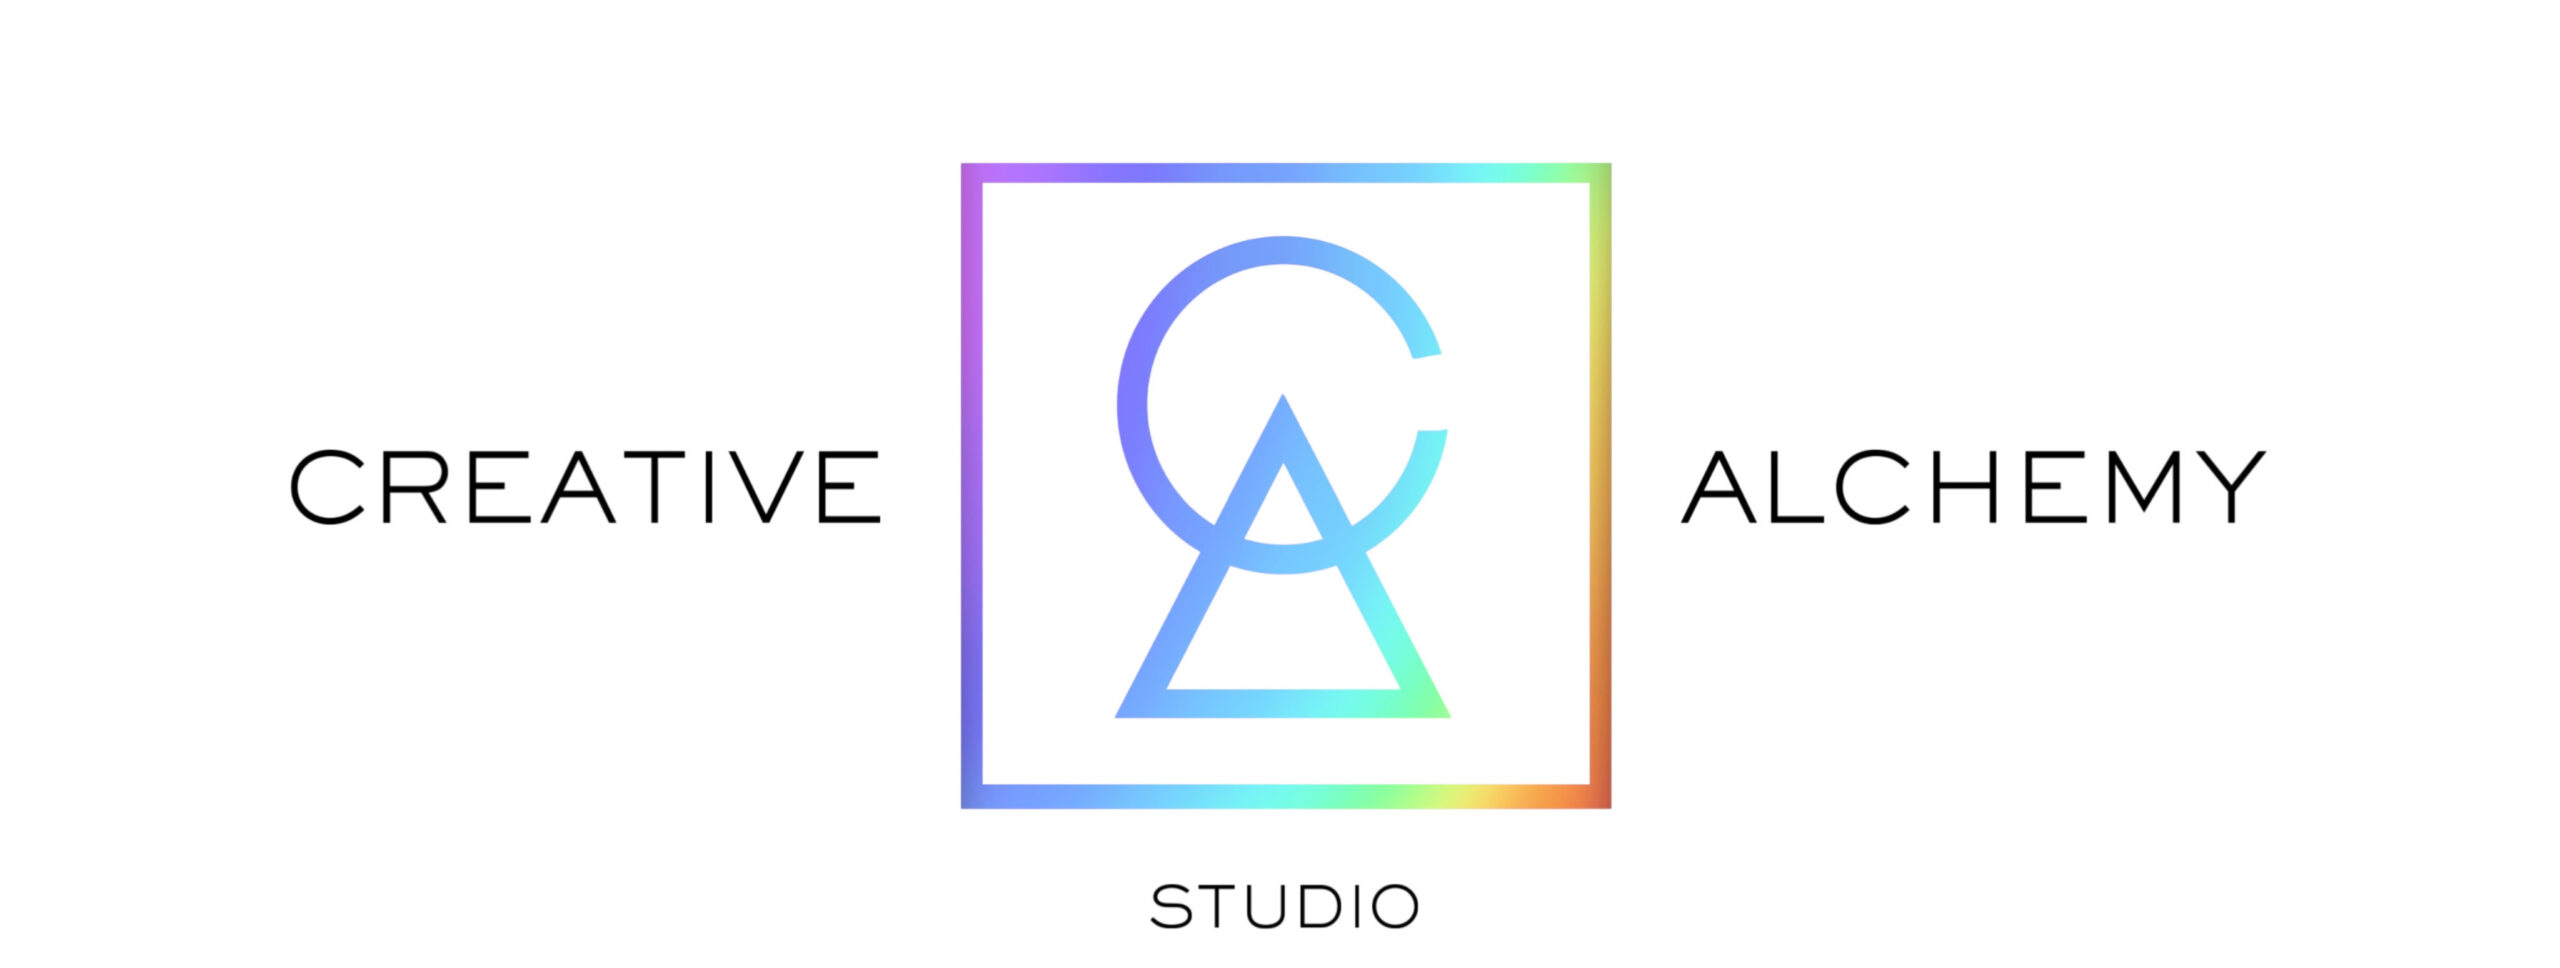 Creative Alchemy Studio 